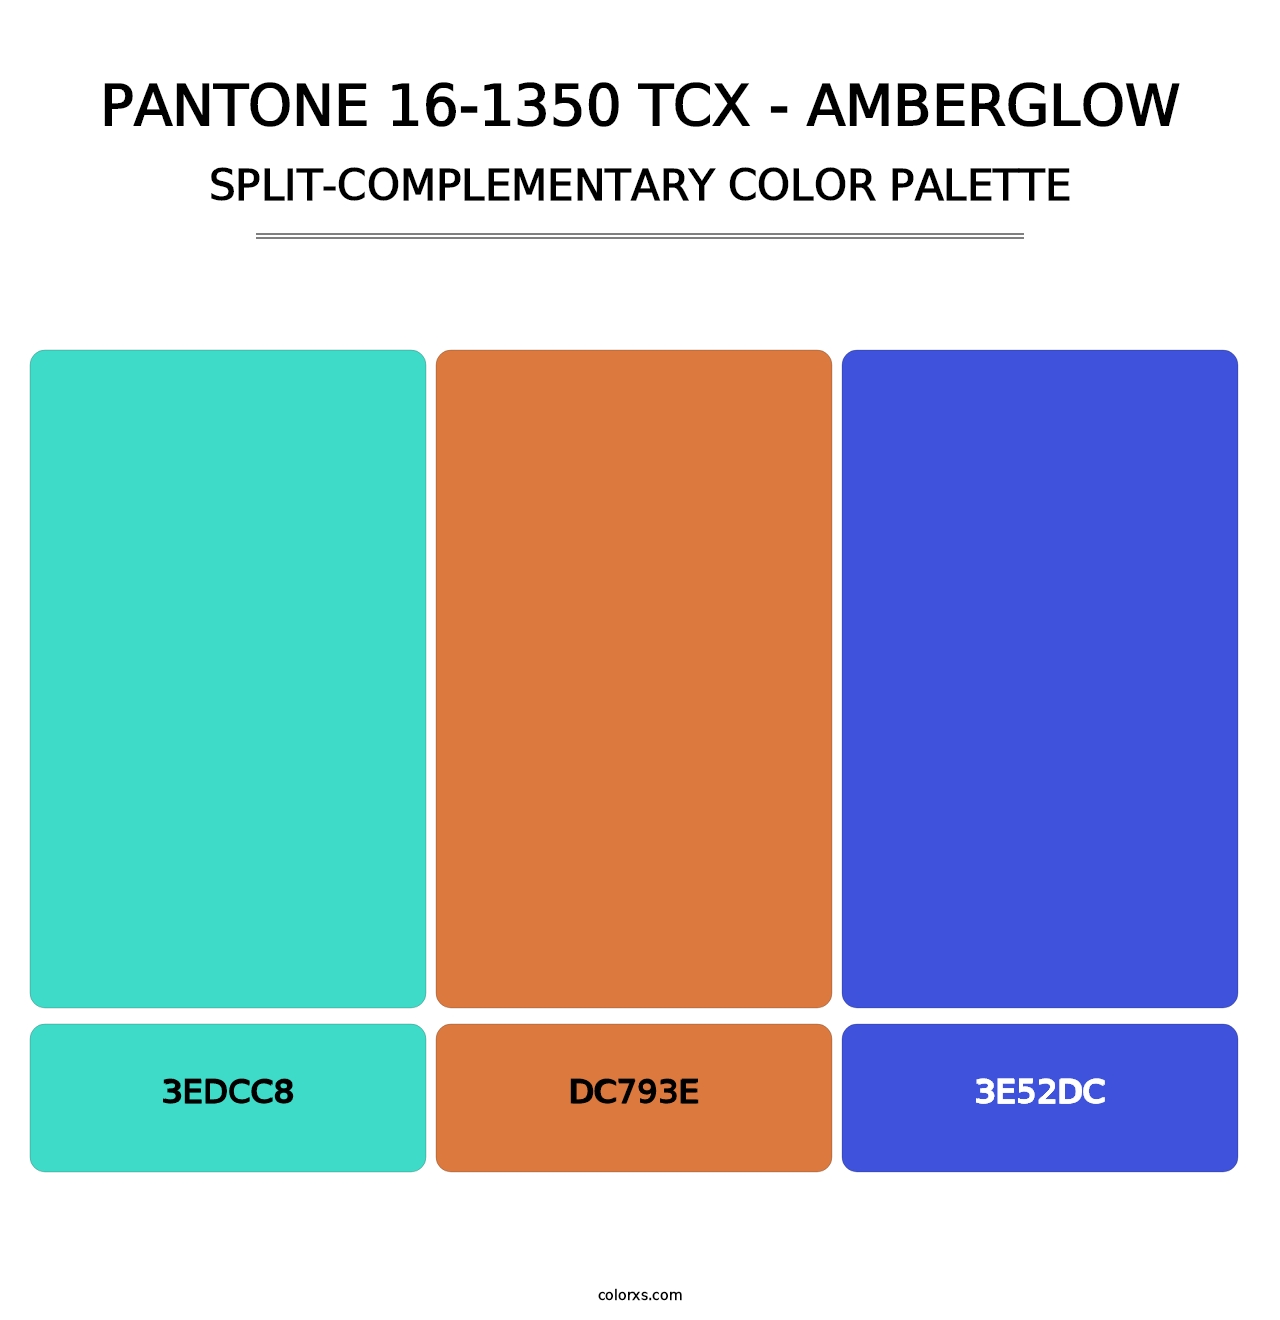 PANTONE 16-1350 TCX - Amberglow - Split-Complementary Color Palette